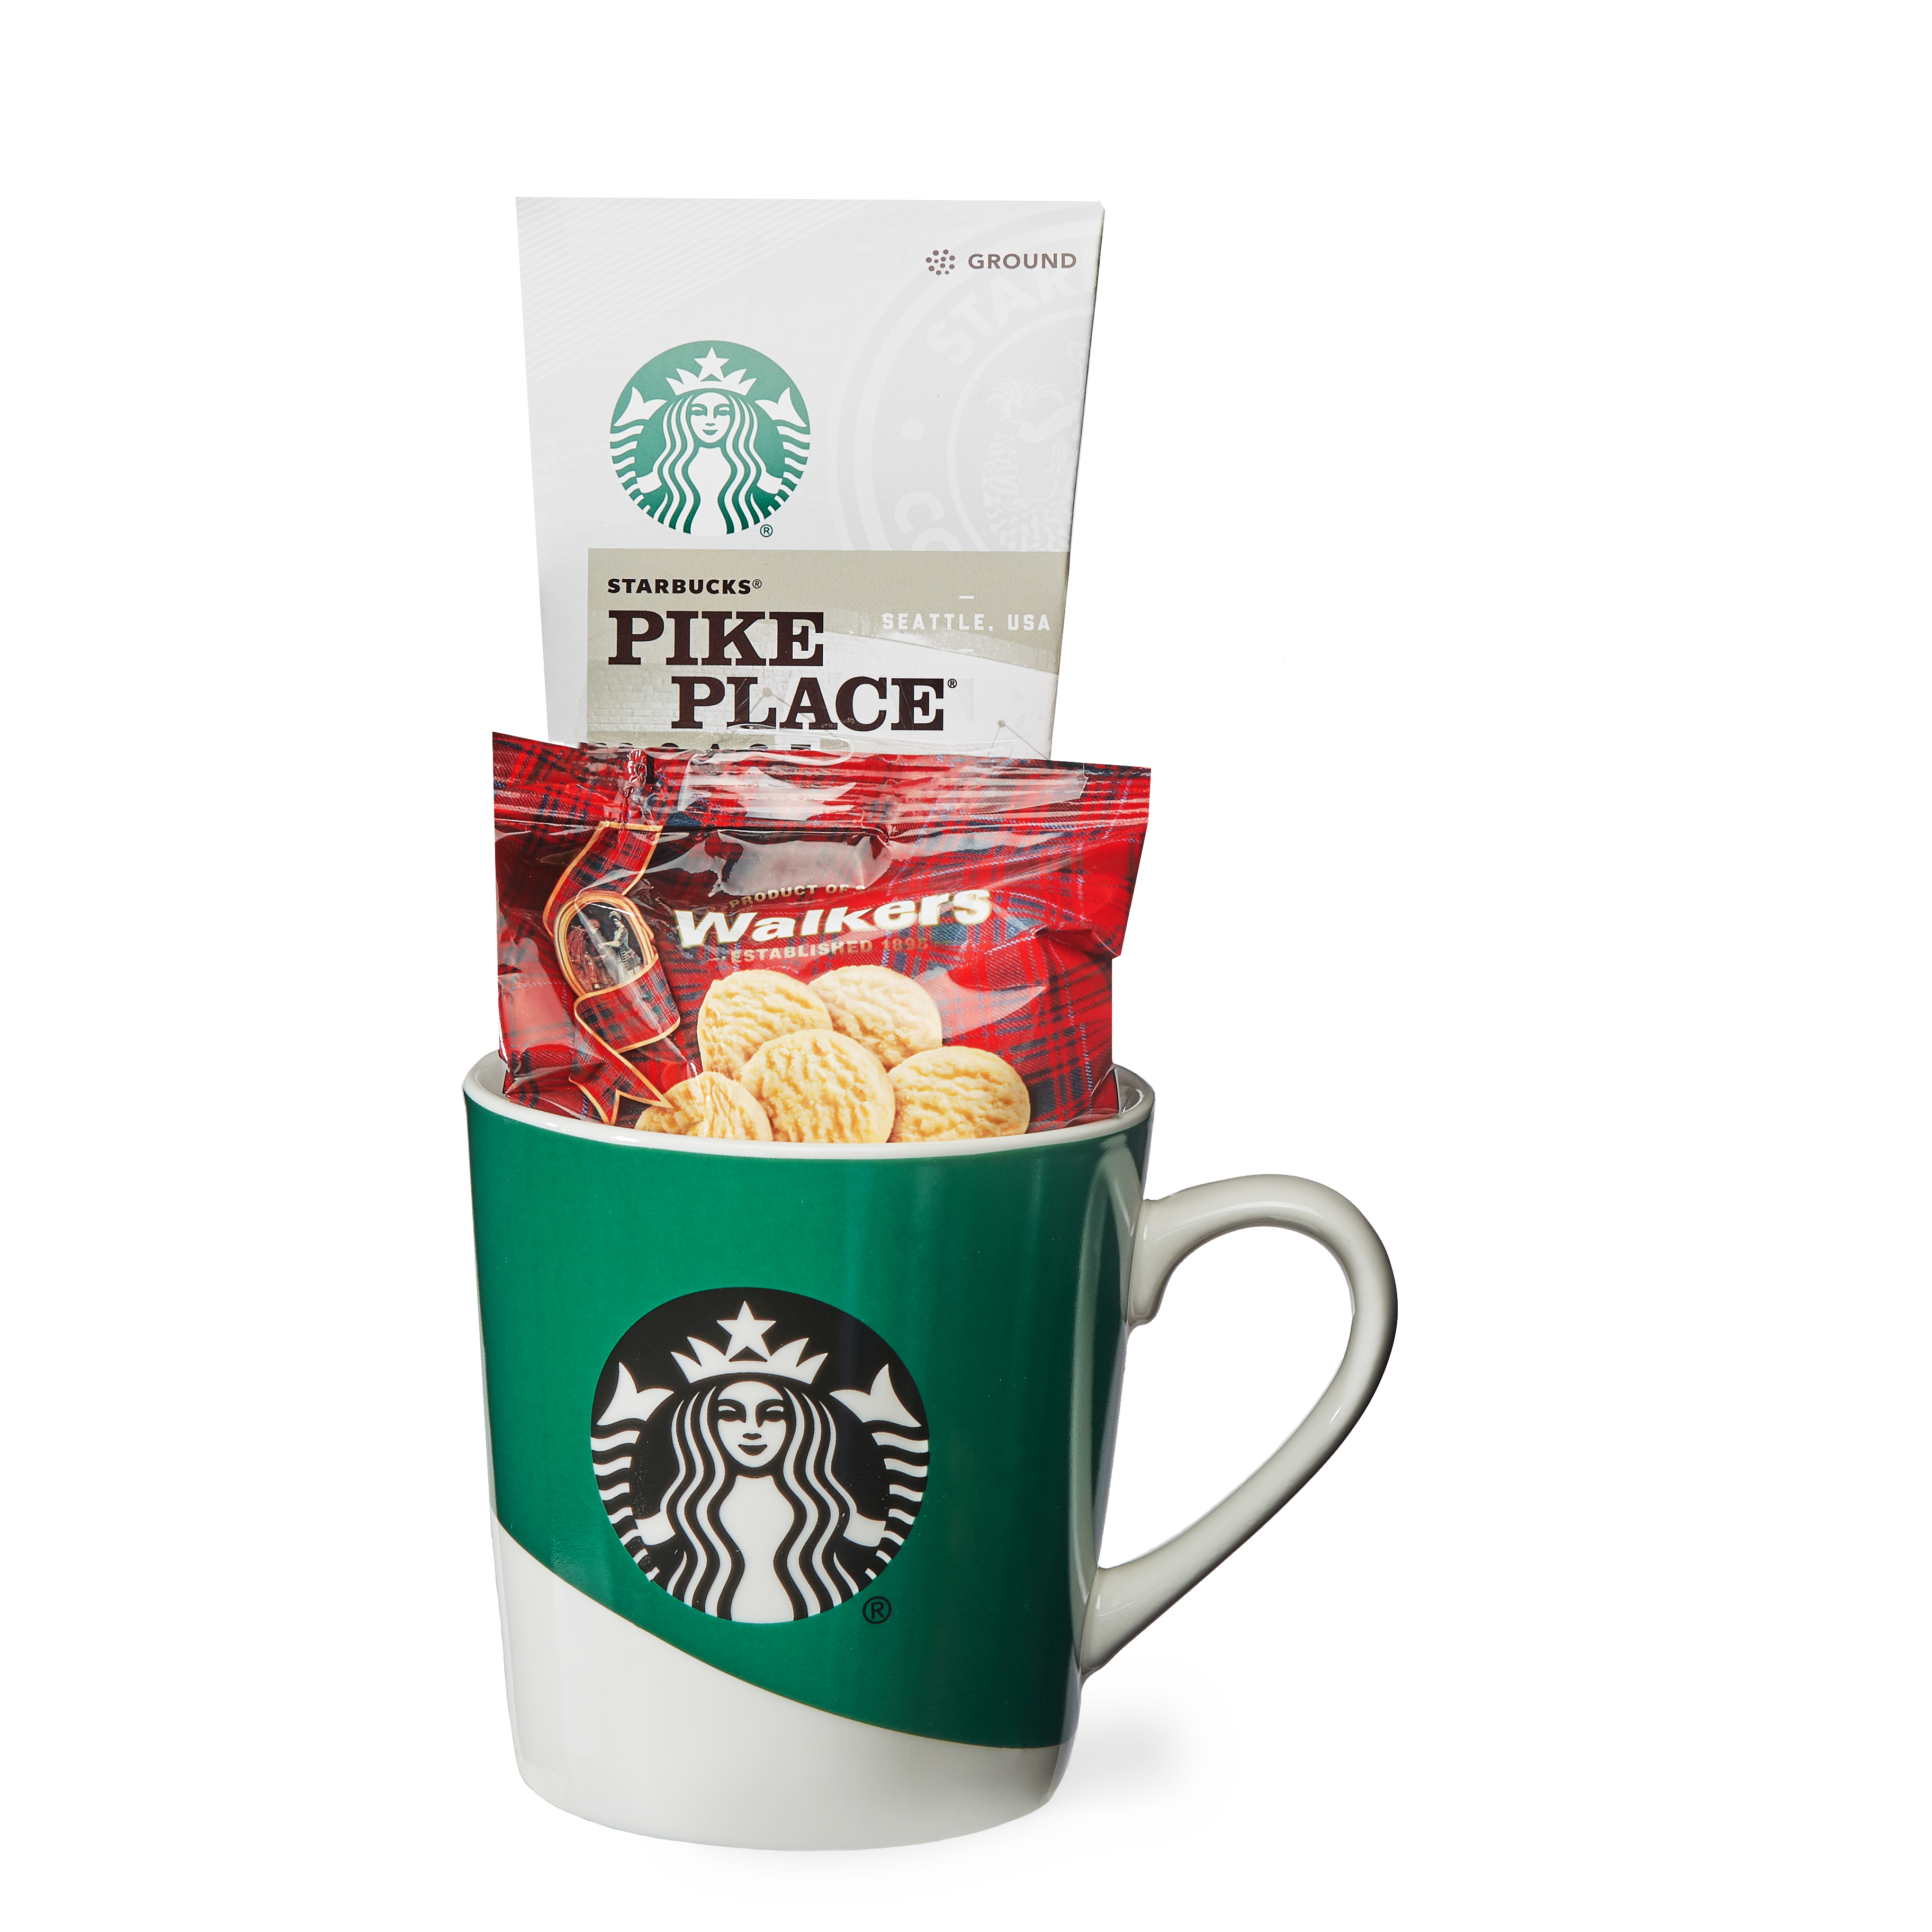 Starbucks Holiday Mug Gift (Style Will Vary) - image 1 of 2